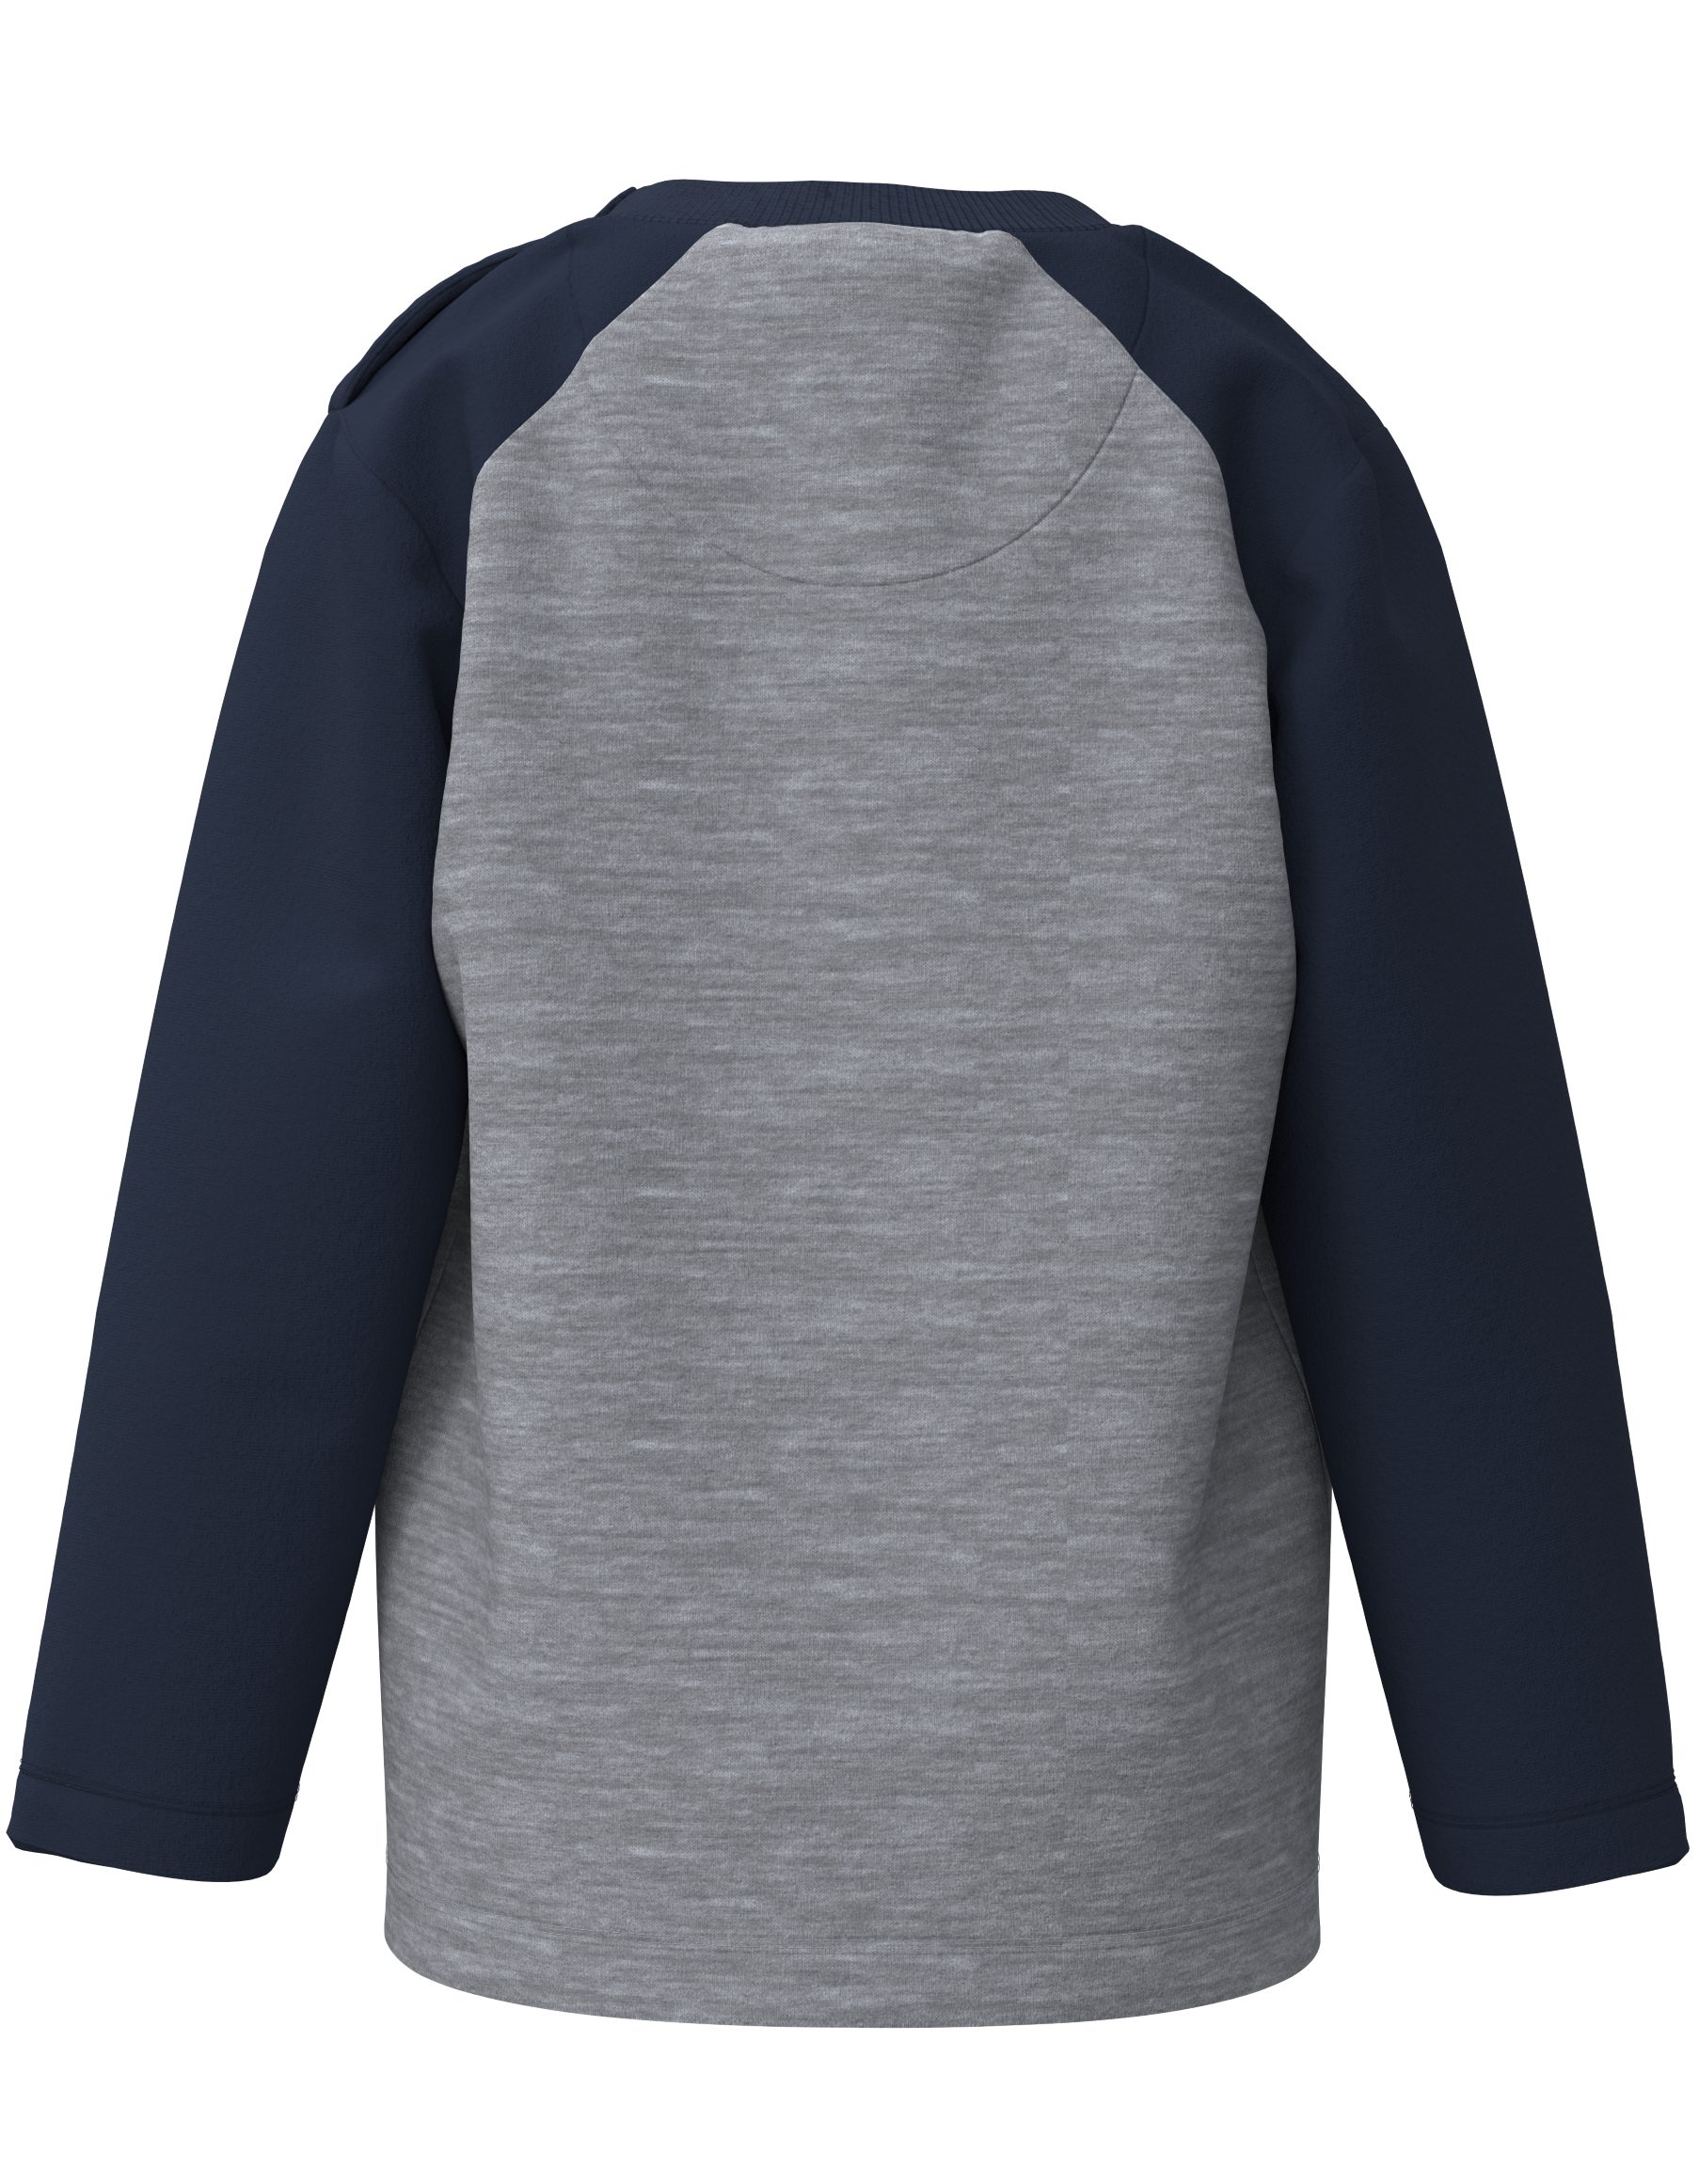 100 kontrastfarbige Langarmshirt melange/blau Bobo Siebenschläfer bedruckt, unisex % Bio-Baumwolle, Ärmel, Raglan, grau